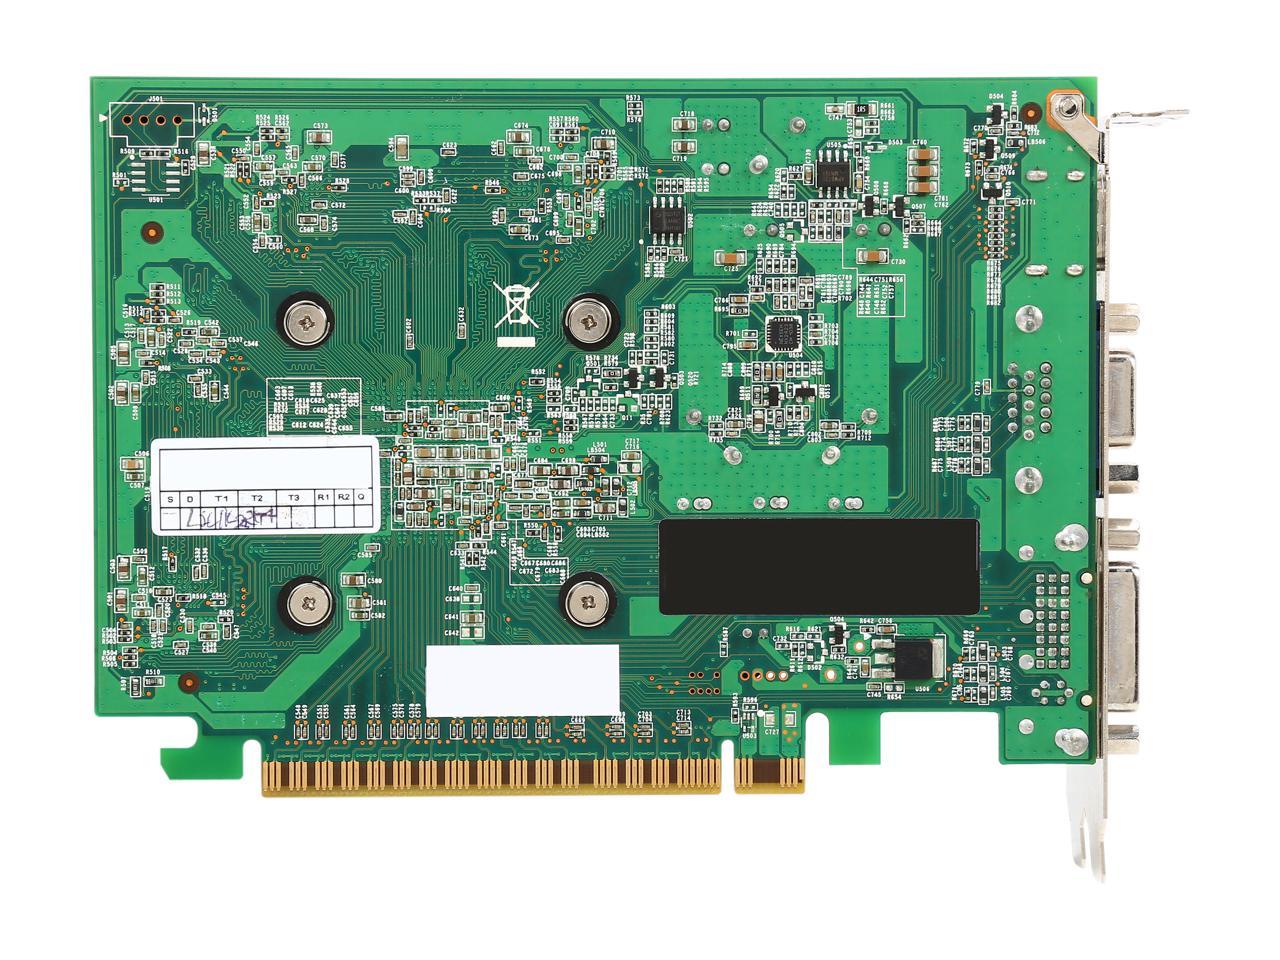 EVGA GeForce GT 630 DirectX 12 (feature level 11_0) 01G-P3-2632-RX 1GB 128-Bit GDDR5 PCI Express 2.0 x16 HDCP Ready Video Card